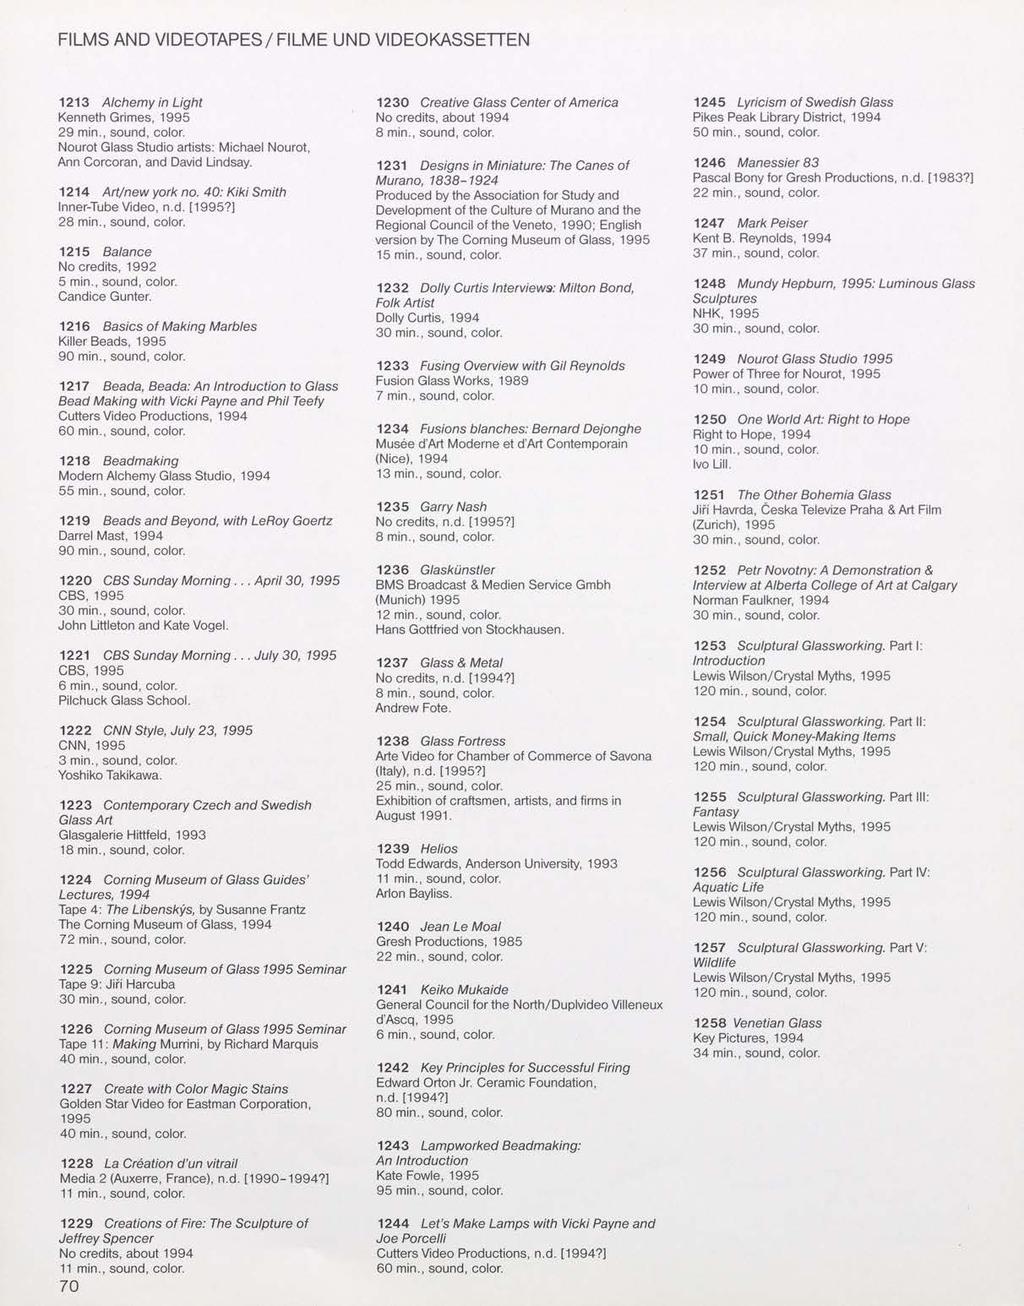 FILMS AND VIDEOTAPES/ FILME UND VIDEOKASSETTEN 1213 Alchemy in Light Kenneth Grimes, 1995 29 min., sound, color. Nourot Glass Studio artists: Michael Nourot, Ann Corcoran, and David Lindsay.